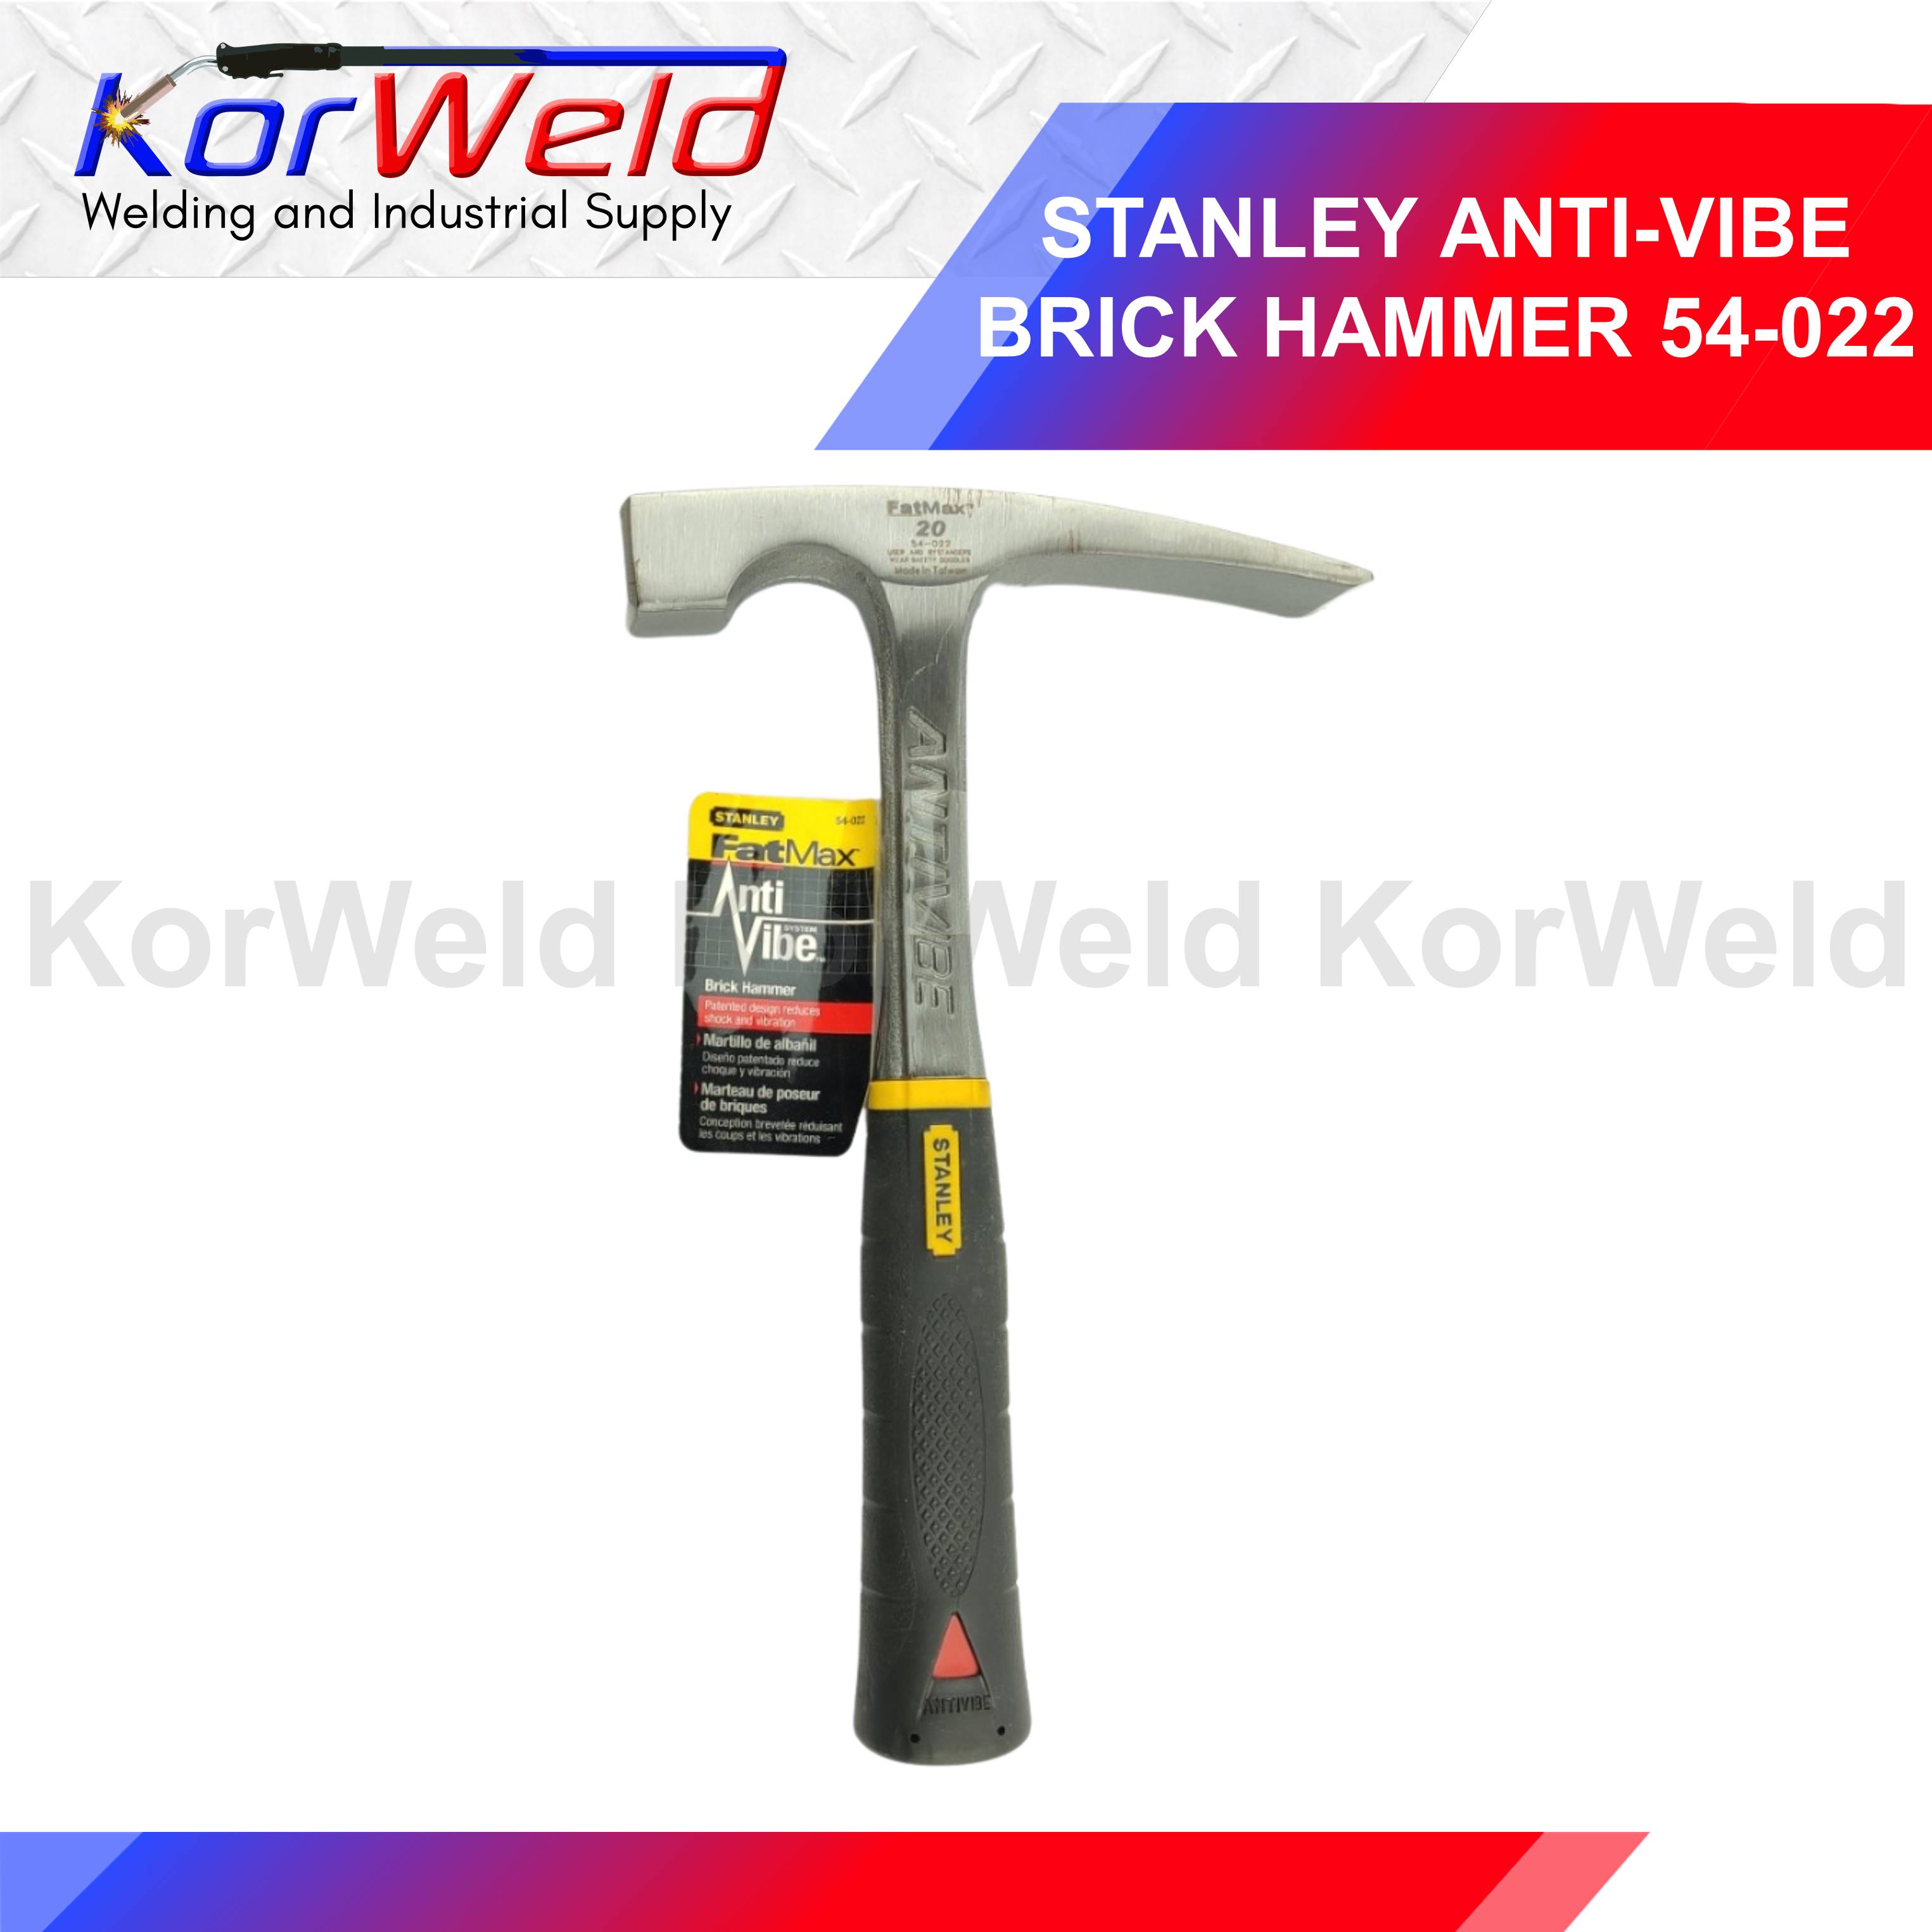 Stanley Anti-Vibe Brick Hammer 54-022 PH Lazada 